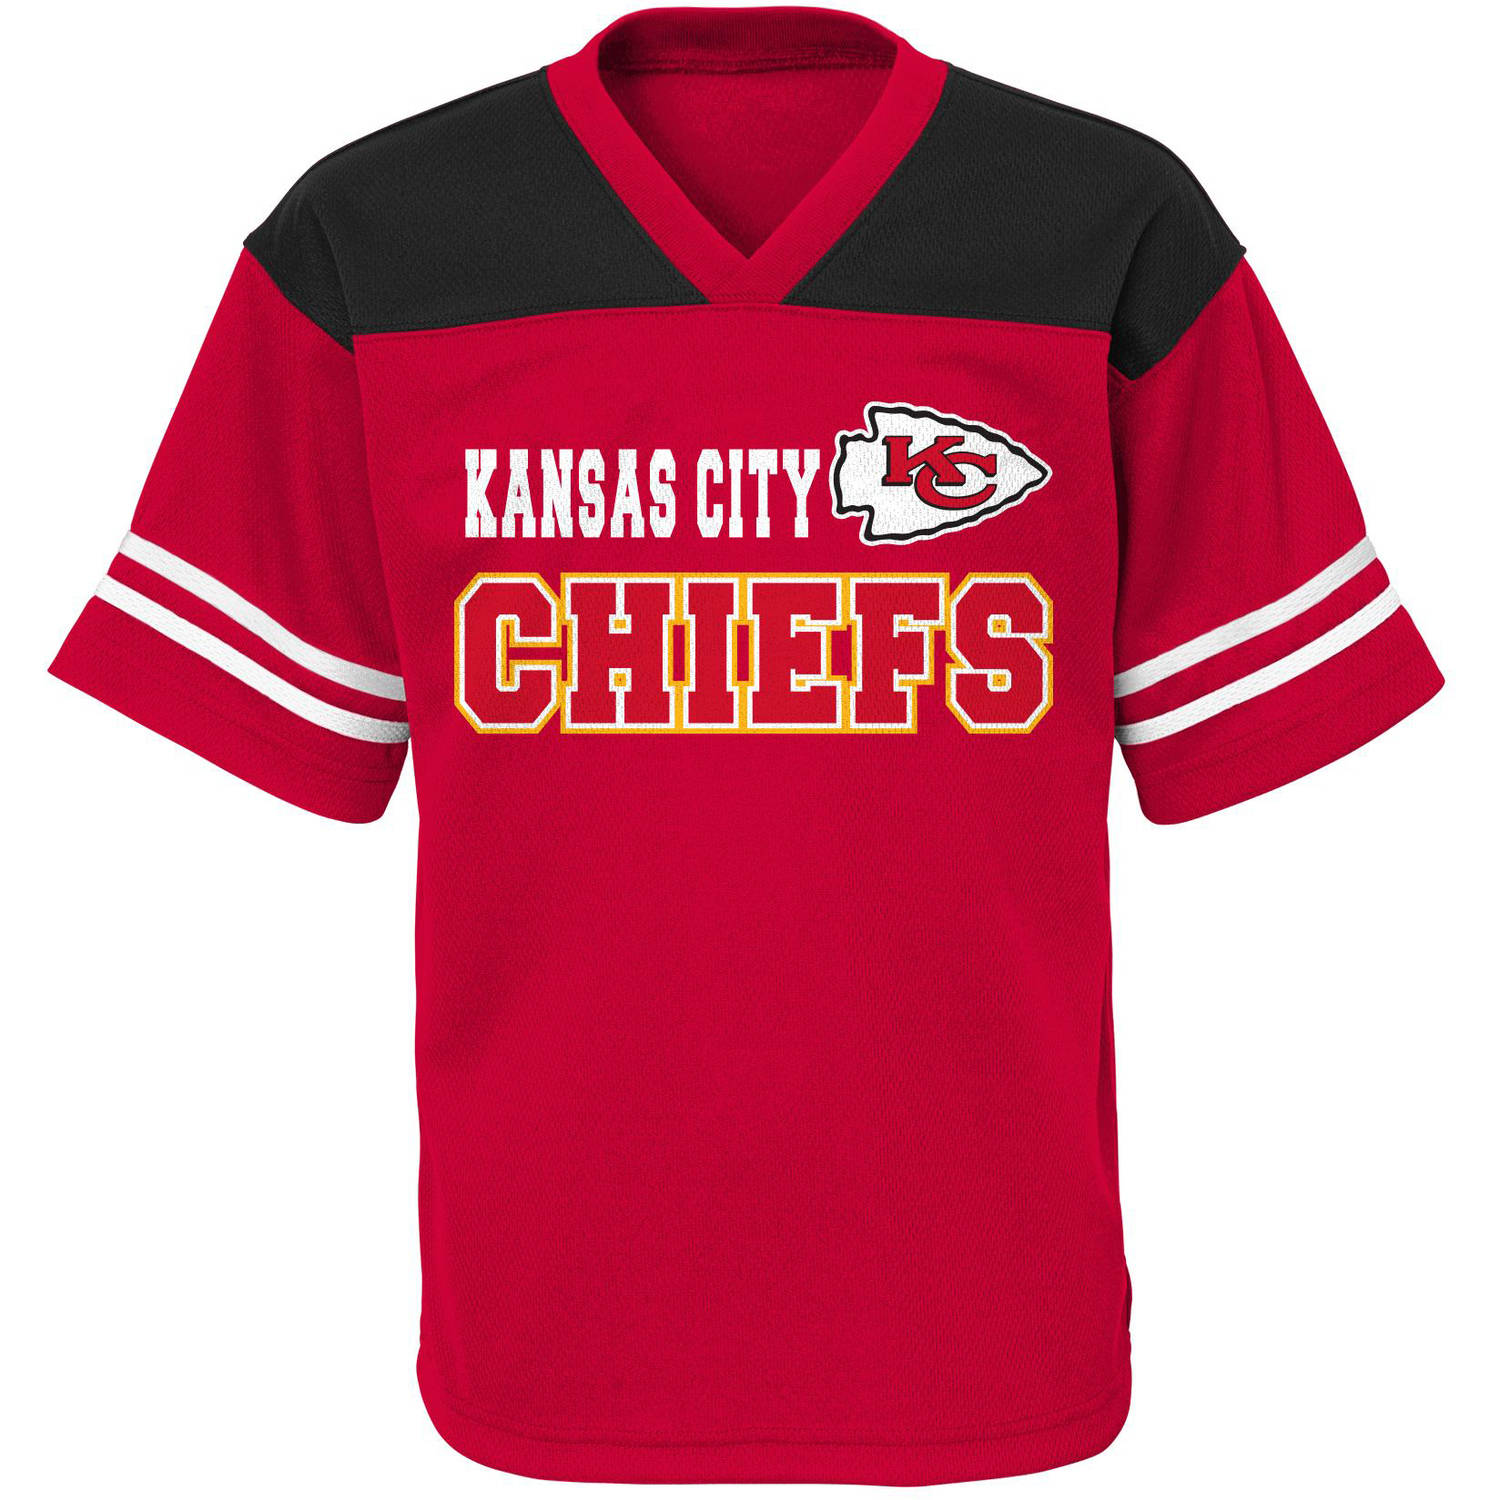 NFL Boys' Kansas City Chiefs Short Sleeve Mesh Team Top - image 1 of 1